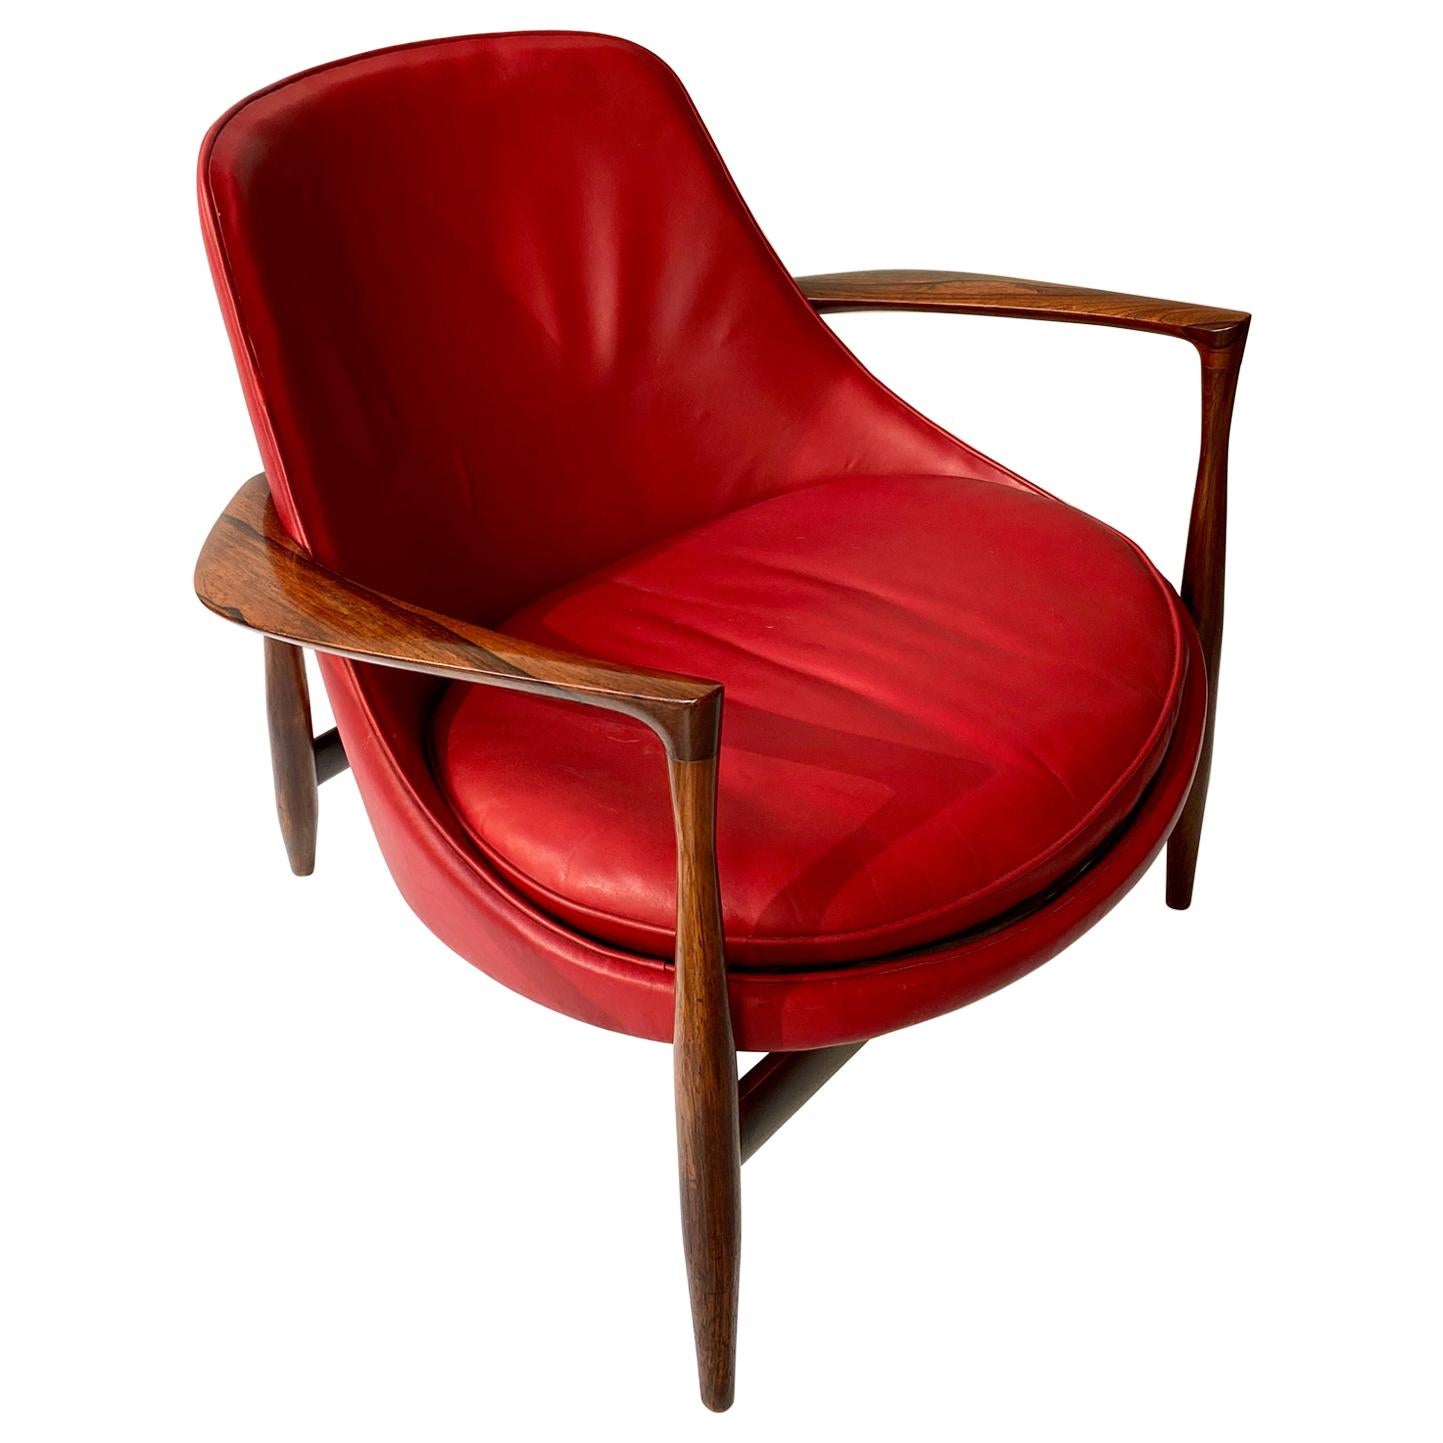 Ib Kofod - Larsen “Elizabeth” Chair in Rosewood, 1956